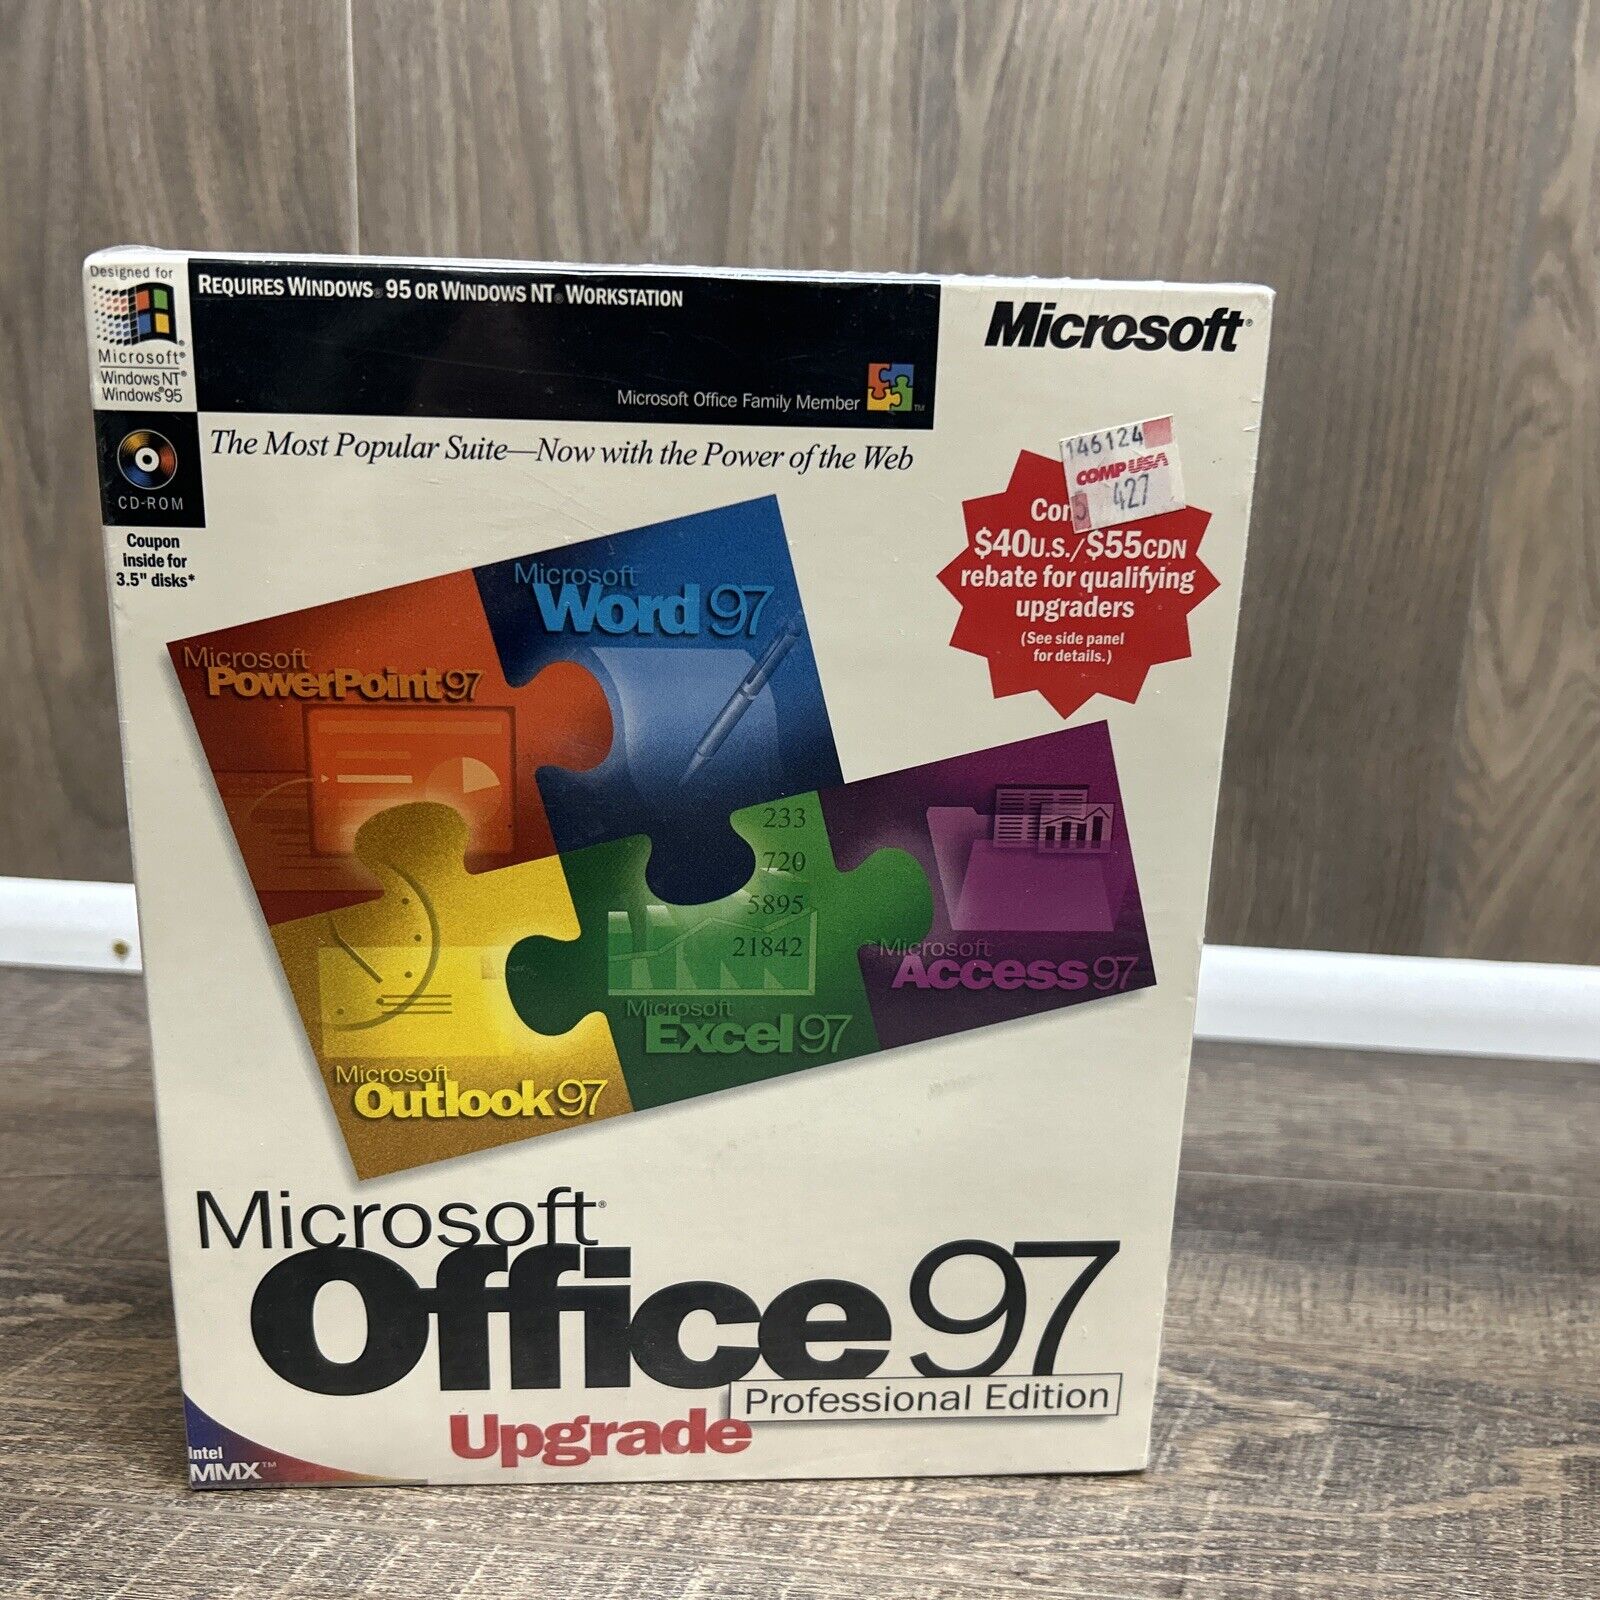 Microsoft Office 97 Professional Edition Upgrade SEALED COMPUSA Big Box